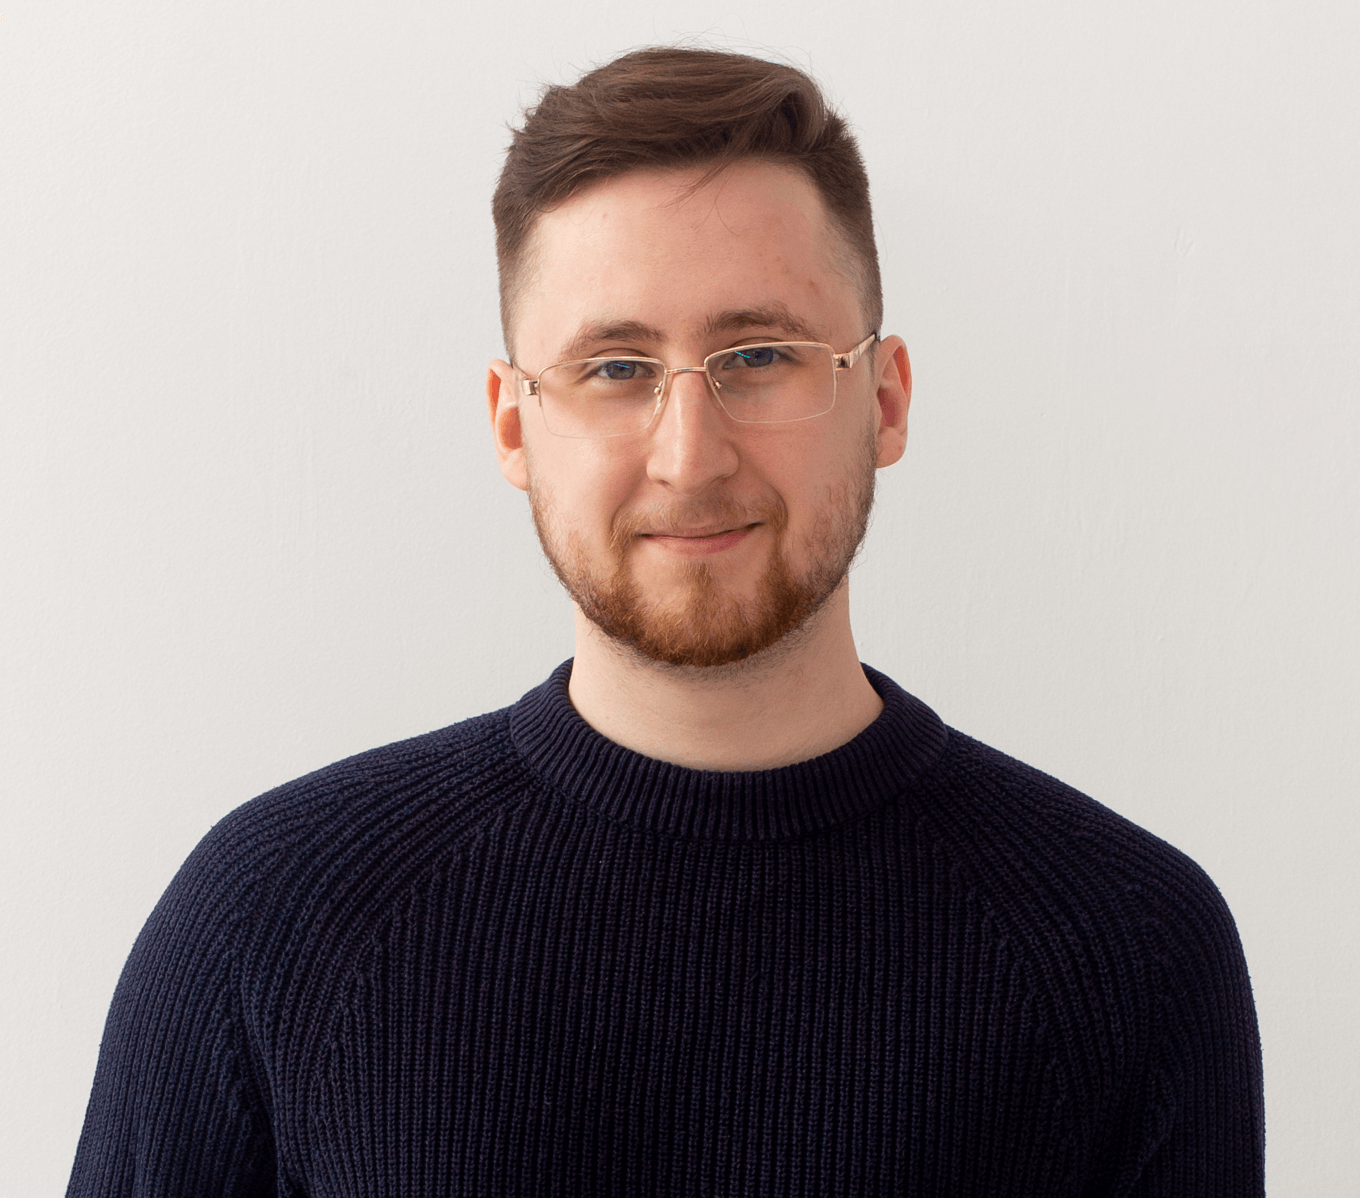 Роман Штых, CEO разработчика блокчейн-решений MetaLamp